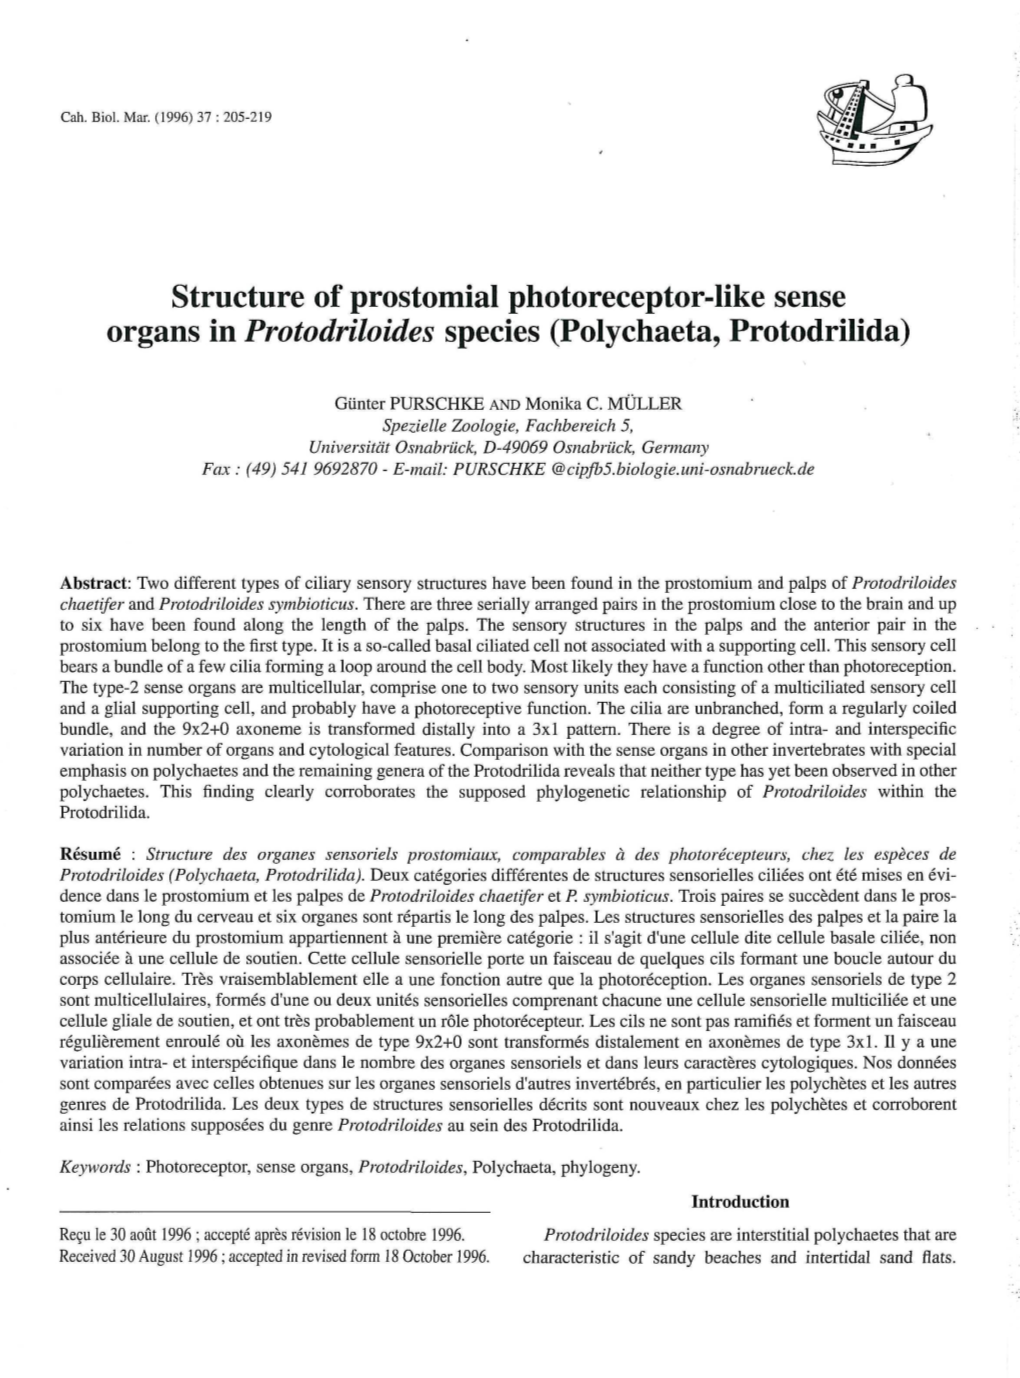 Structure of Prostomial Photoreceptor-Like Sense Organs in Protodriloides Species (Polychaeta, Protodrilida)